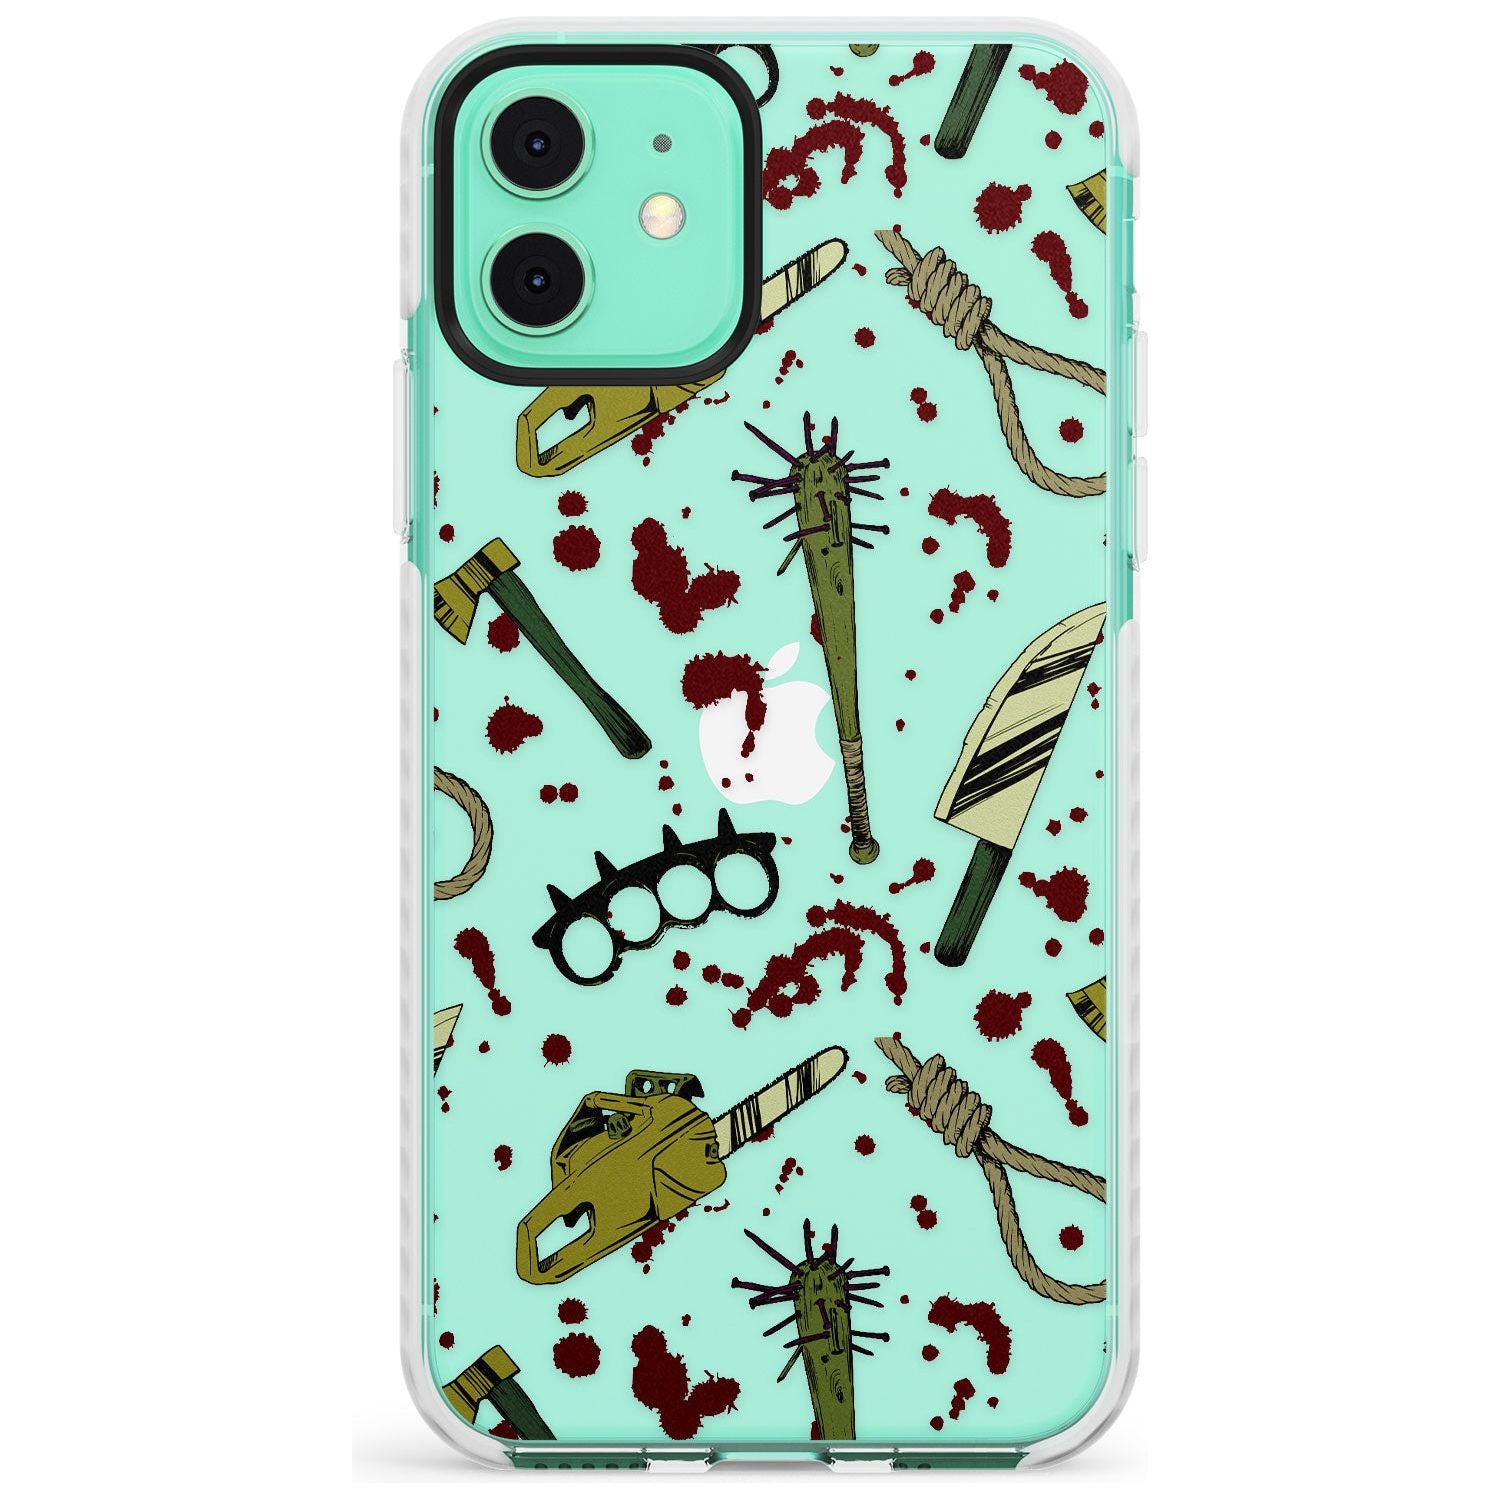 Movie Massacre Impact Phone Case for iPhone 11